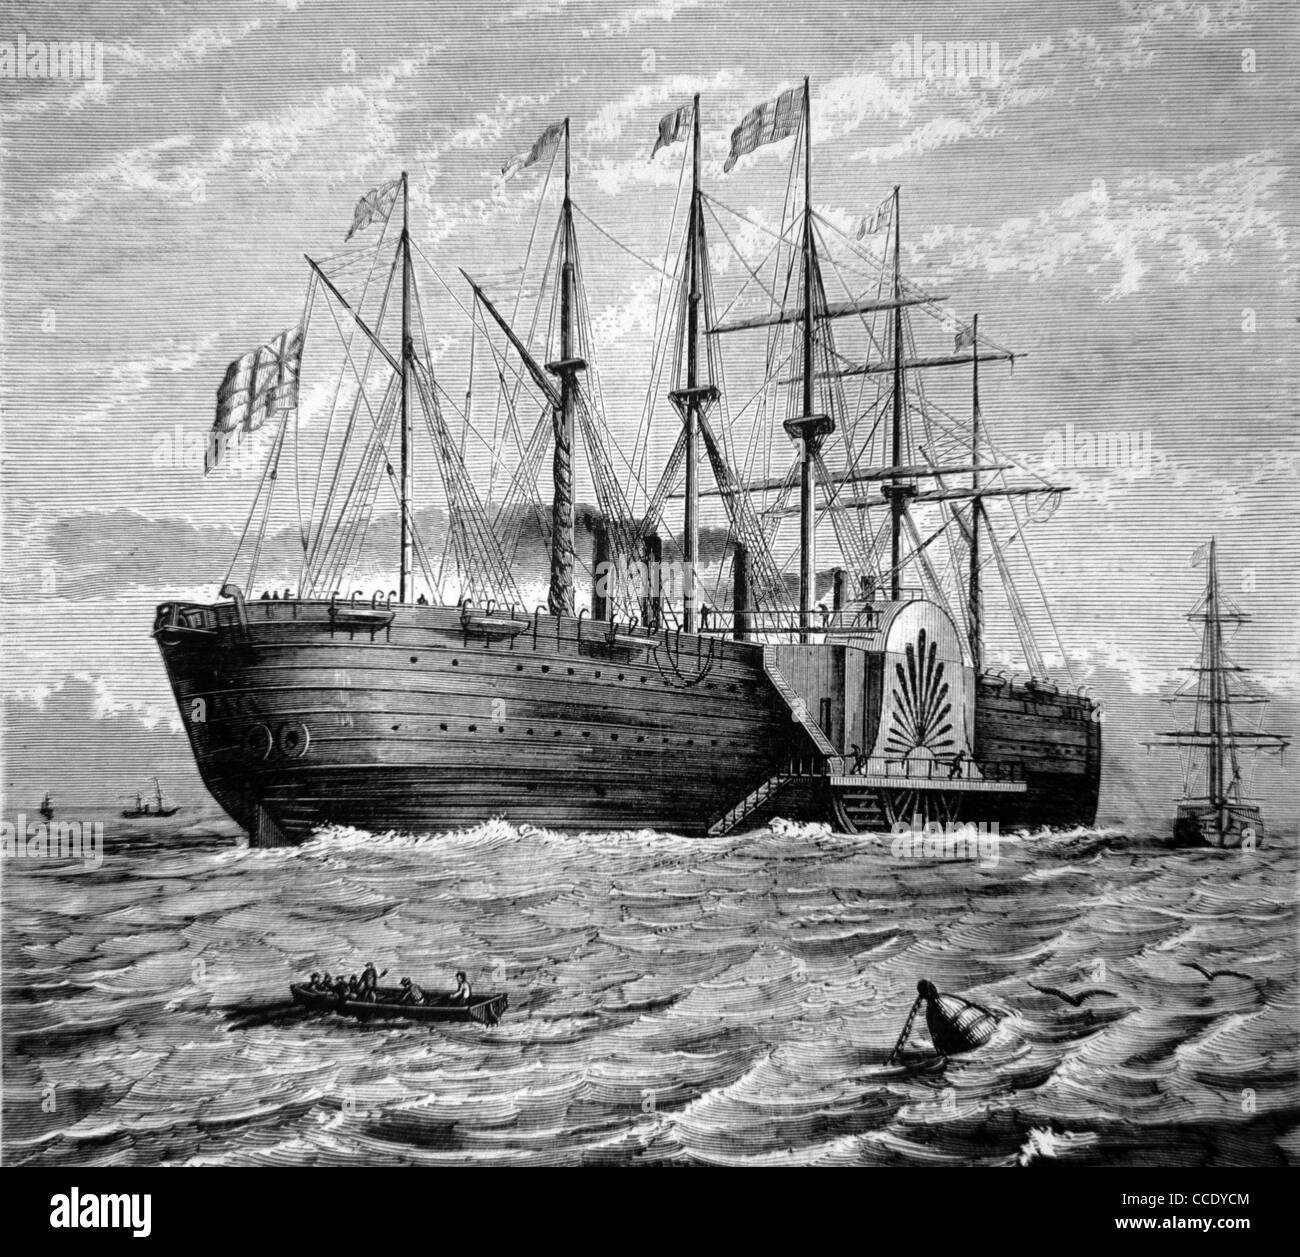 SS Great Eastern Ocean Liner, Paddle Steamer, Steamship or Ship. Vintage Illustration or Engraving Stock Photo